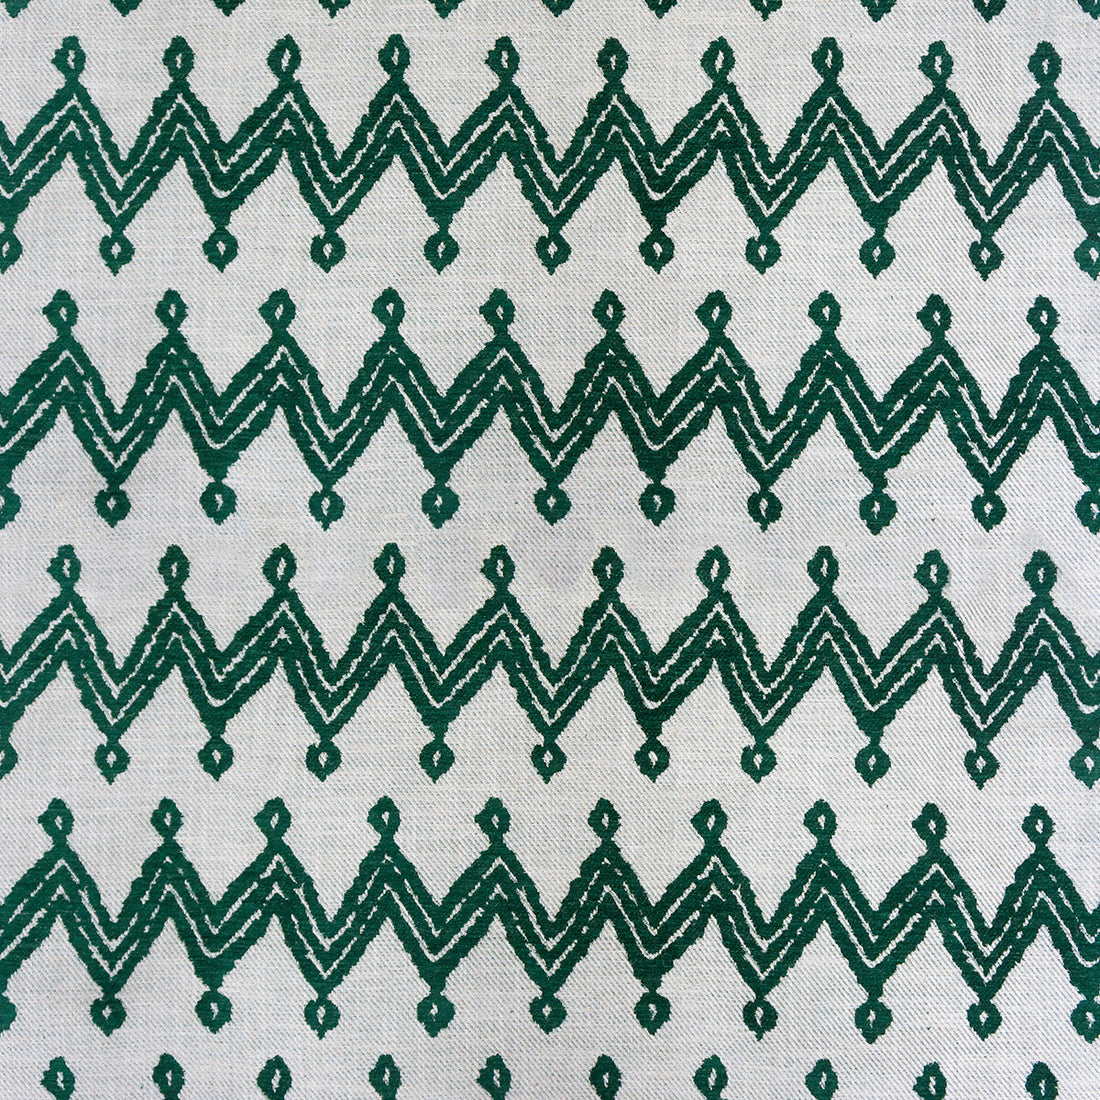 Navajo fabric in verde color - pattern GDT5653.001.0 - by Gaston y Daniela in the Gaston Rio Grande collection